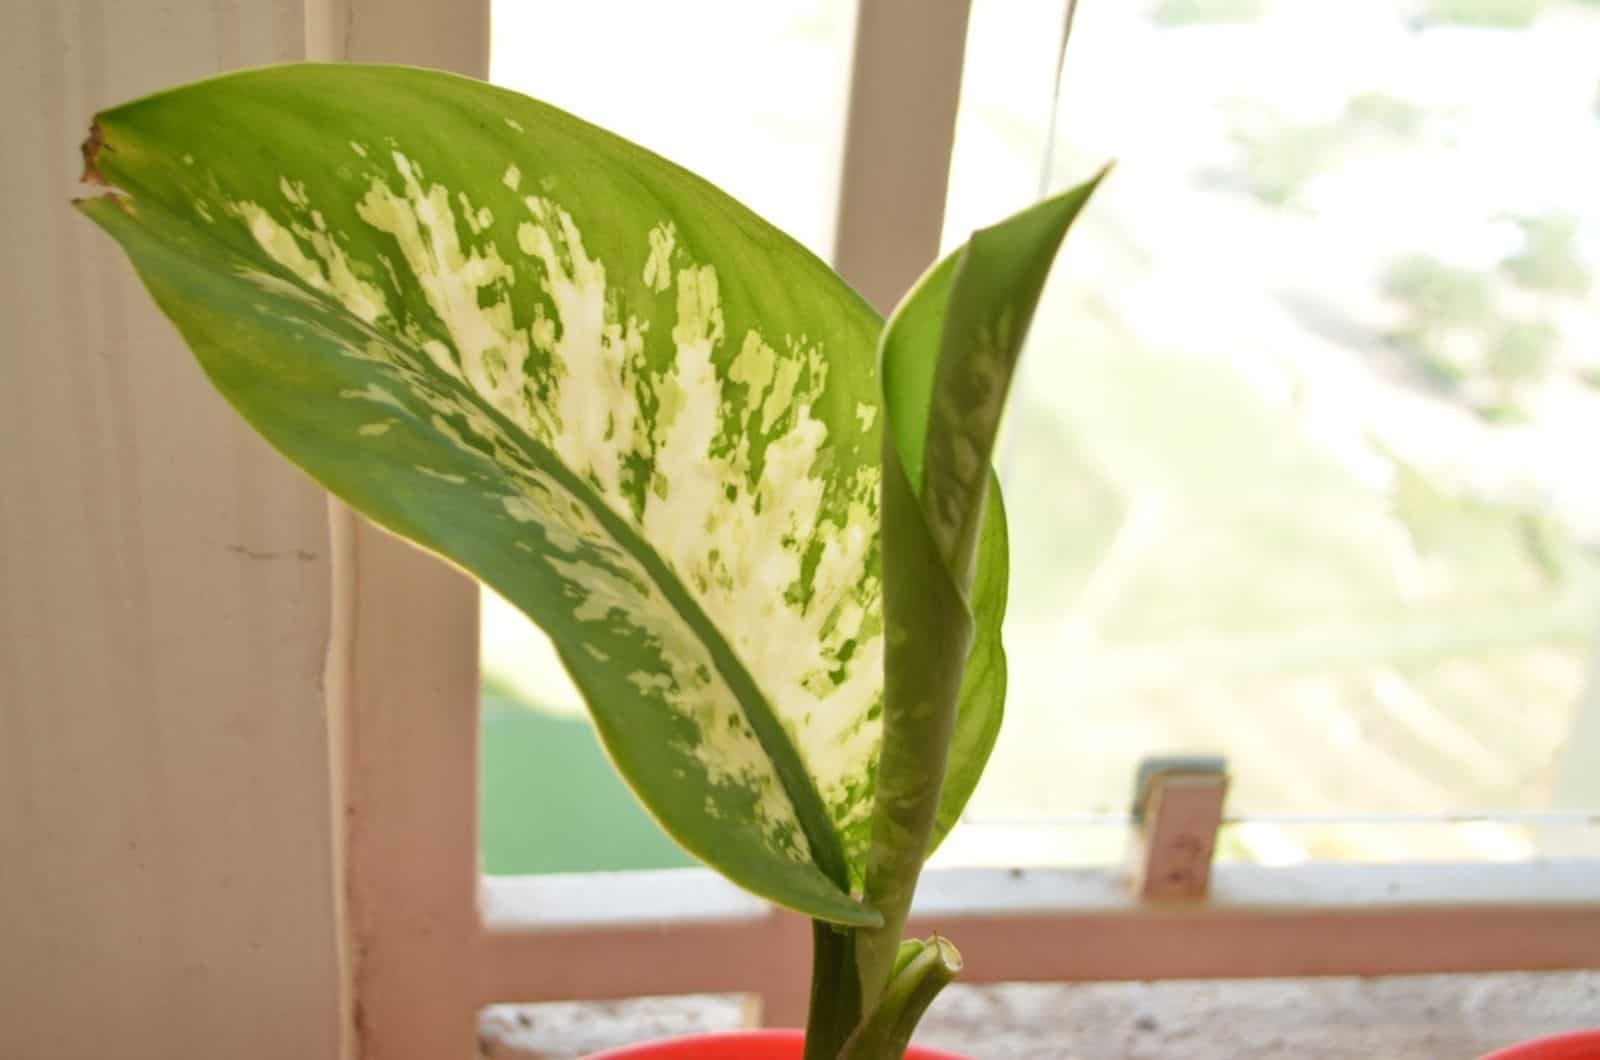 dumbcane plant near the window